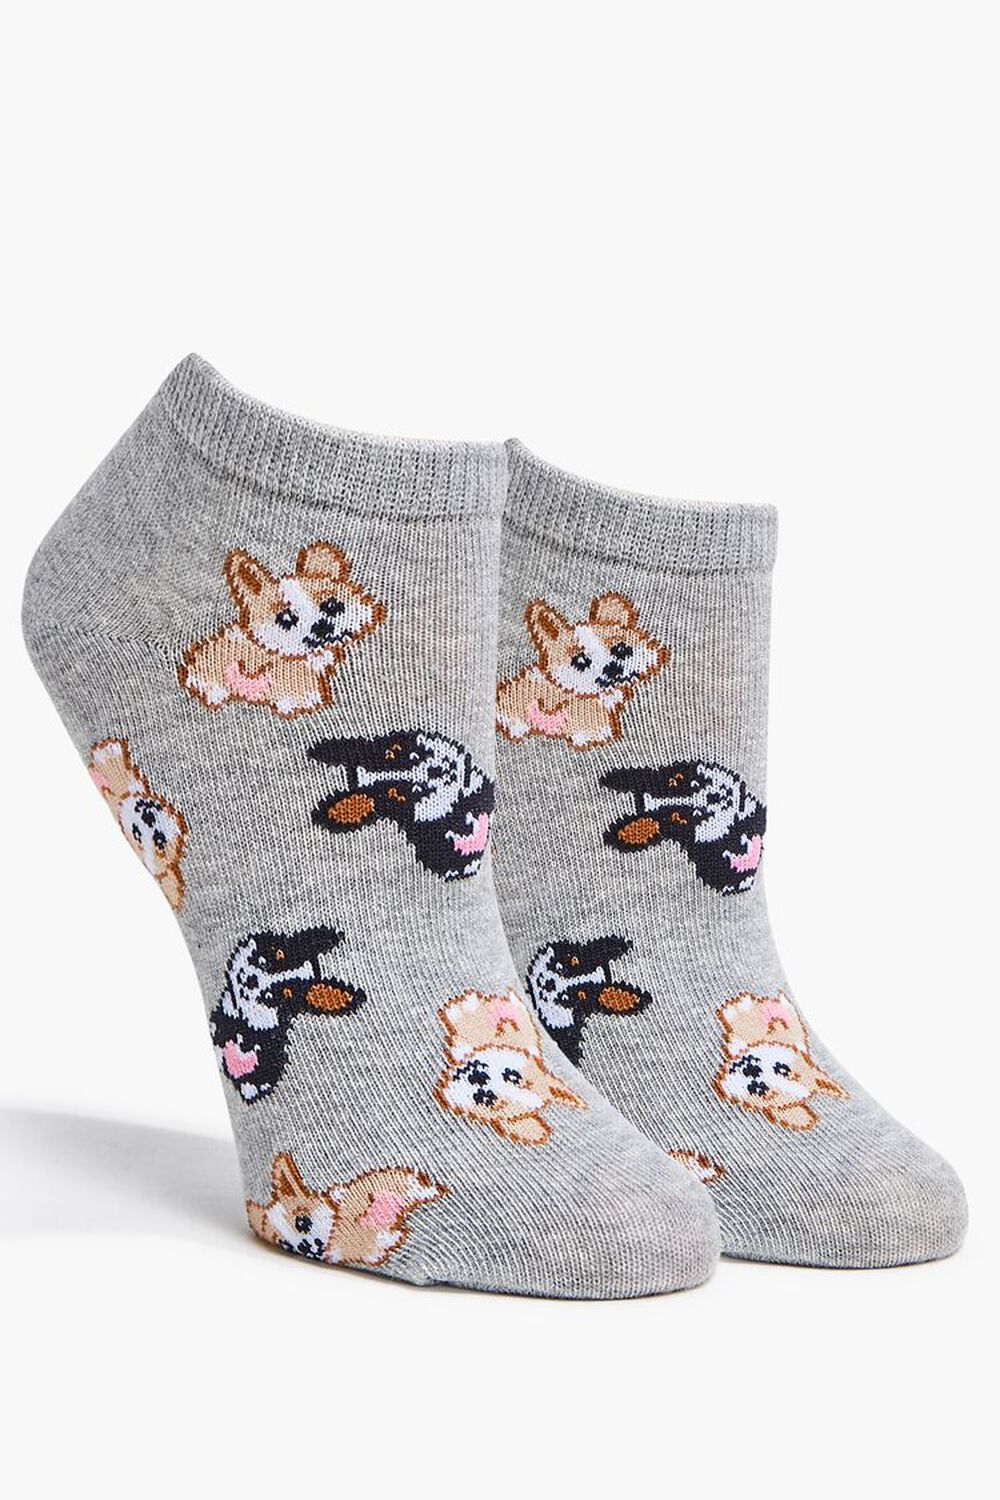 Corgi Puppy Ankle Socks, image 1